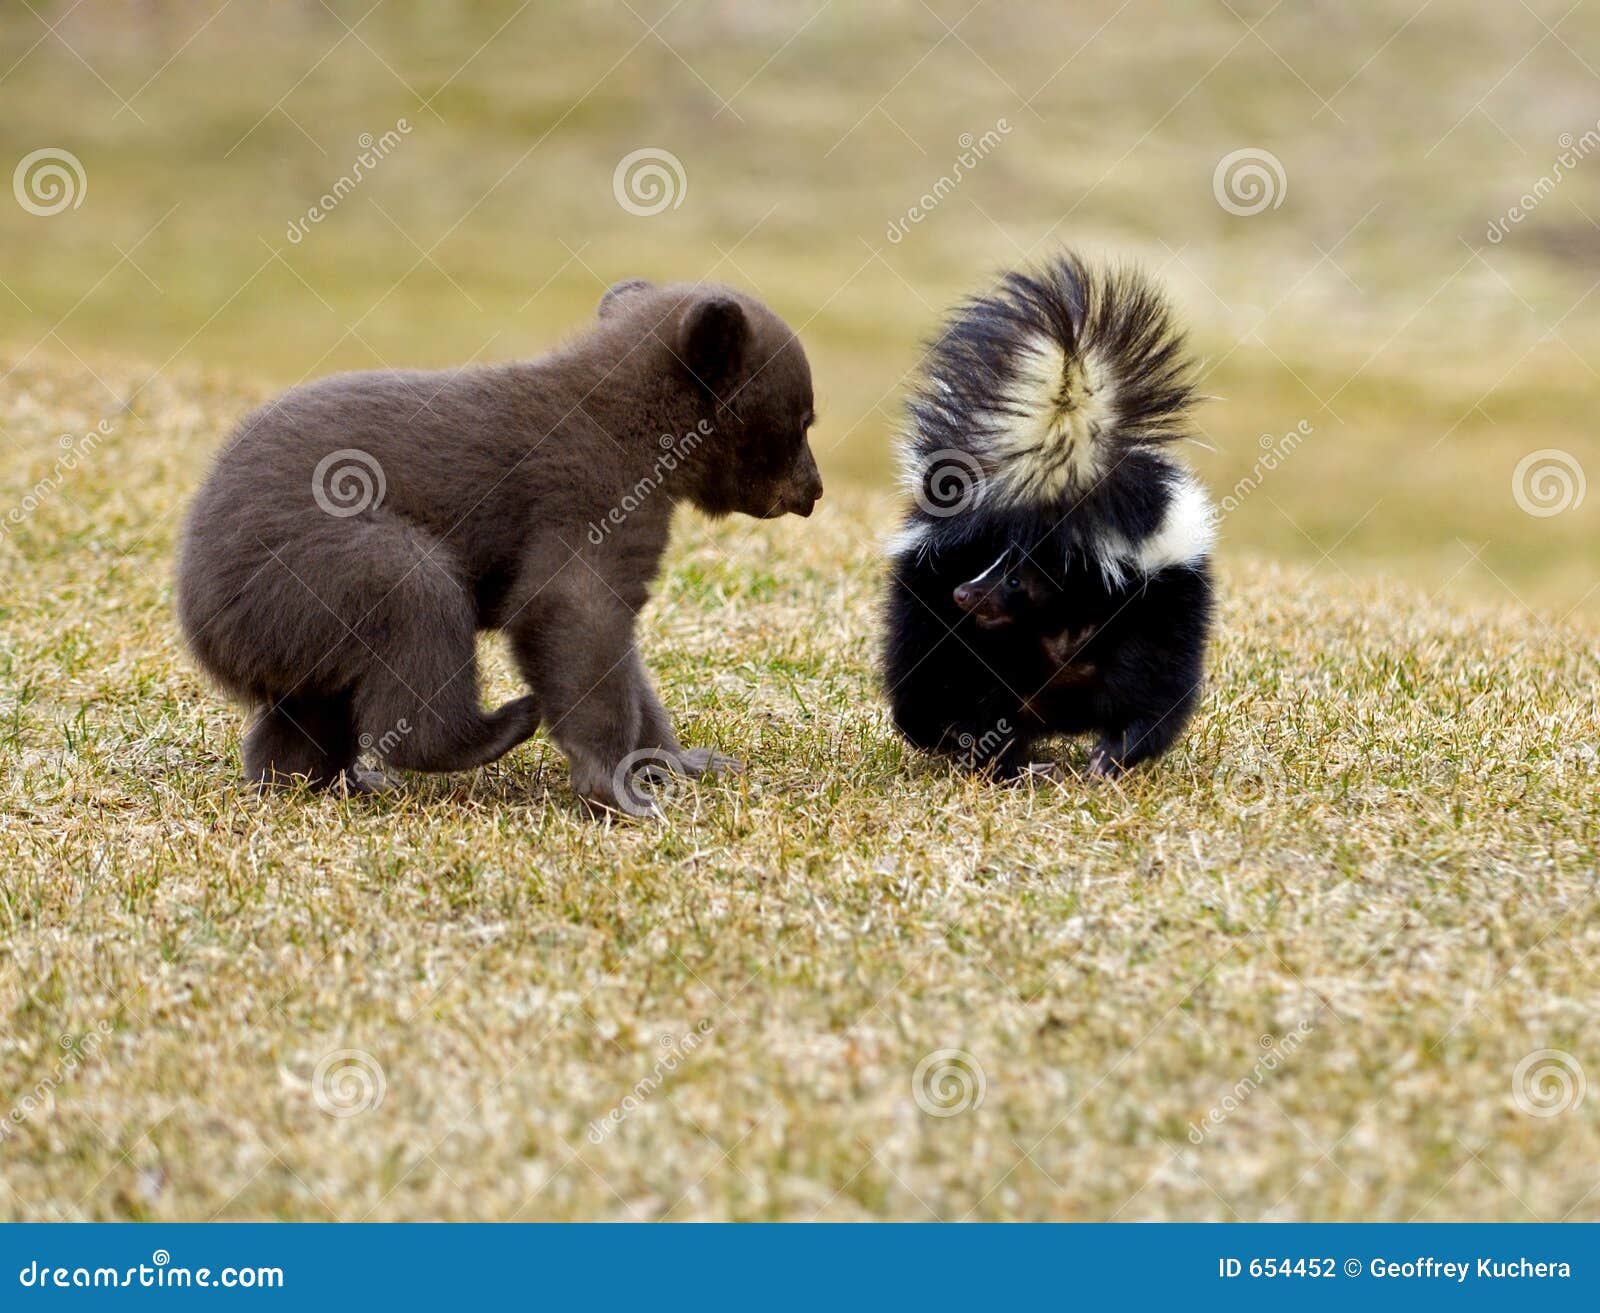 black bear (ursus americanus) meets striped skunk - motion blur